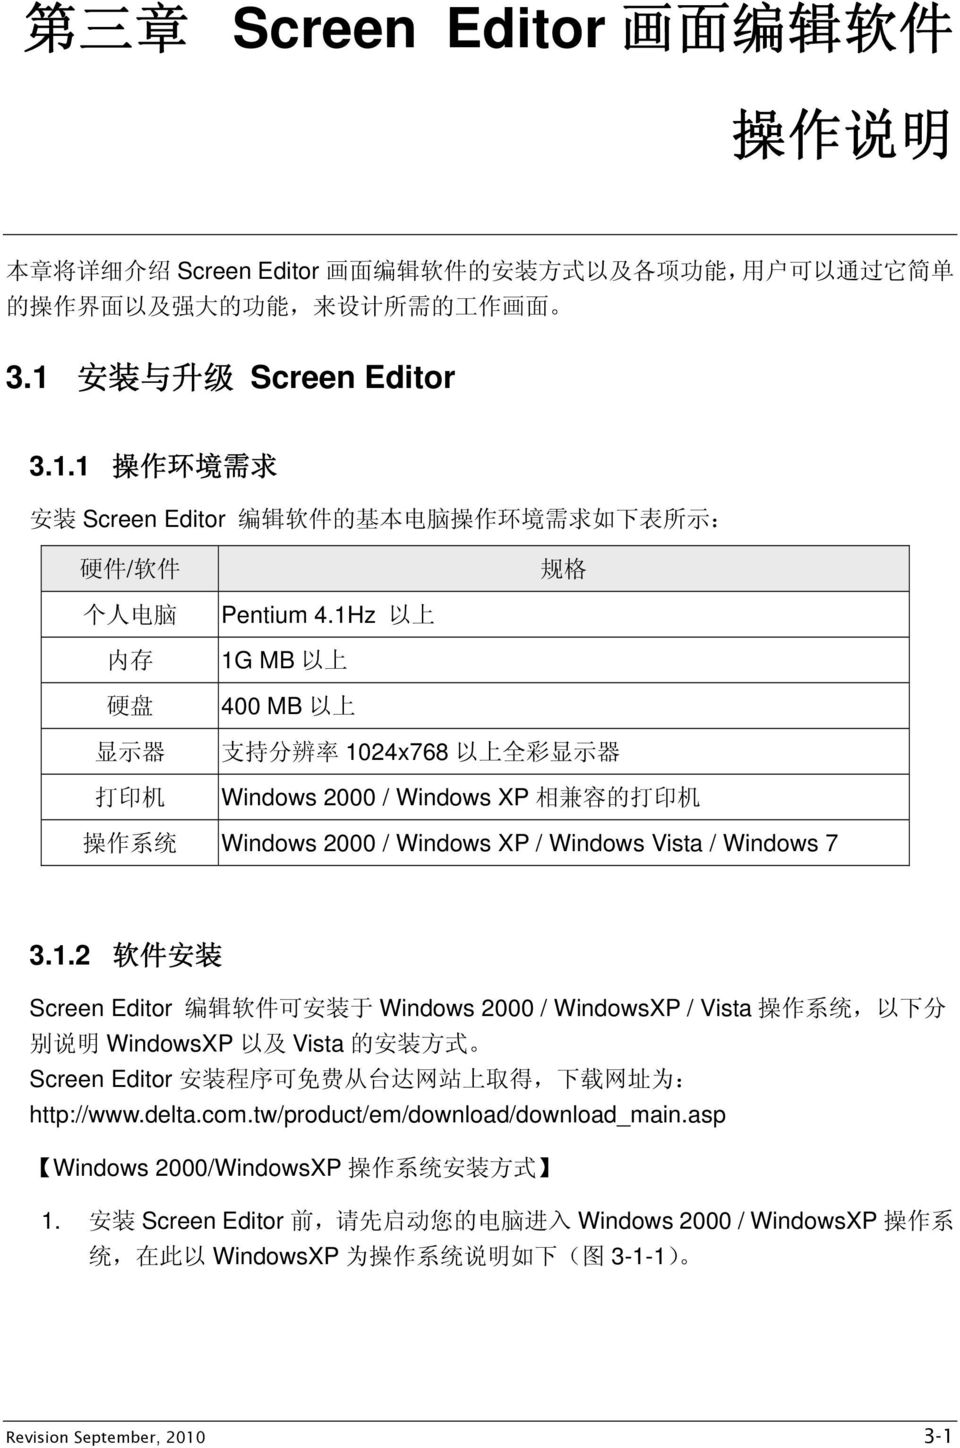 1Hz 以 上 1G MB 以 上 400 MB 以 上 支 持 分 辨 率 1024x768 以 上 全 彩 显 示 器 Windows 2000 / Windows XP 相 兼 容 的 打 印 机 操 作 系 统 Windows 2000 / Windows XP / Windows Vista / Windows 7 3.1.2 软 件 安 装 Screen Editor 编 辑 软 件 可 安 装 于 Windows 2000 / WindowsXP / Vista 操 作 系 统, 以 下 分 别 说 明 WindowsXP 以 及 Vista 的 安 装 方 式 Screen Editor 安 装 程 序 可 免 费 从 台 达 网 站 上 取 得, 下 载 网 址 为 : http://www.